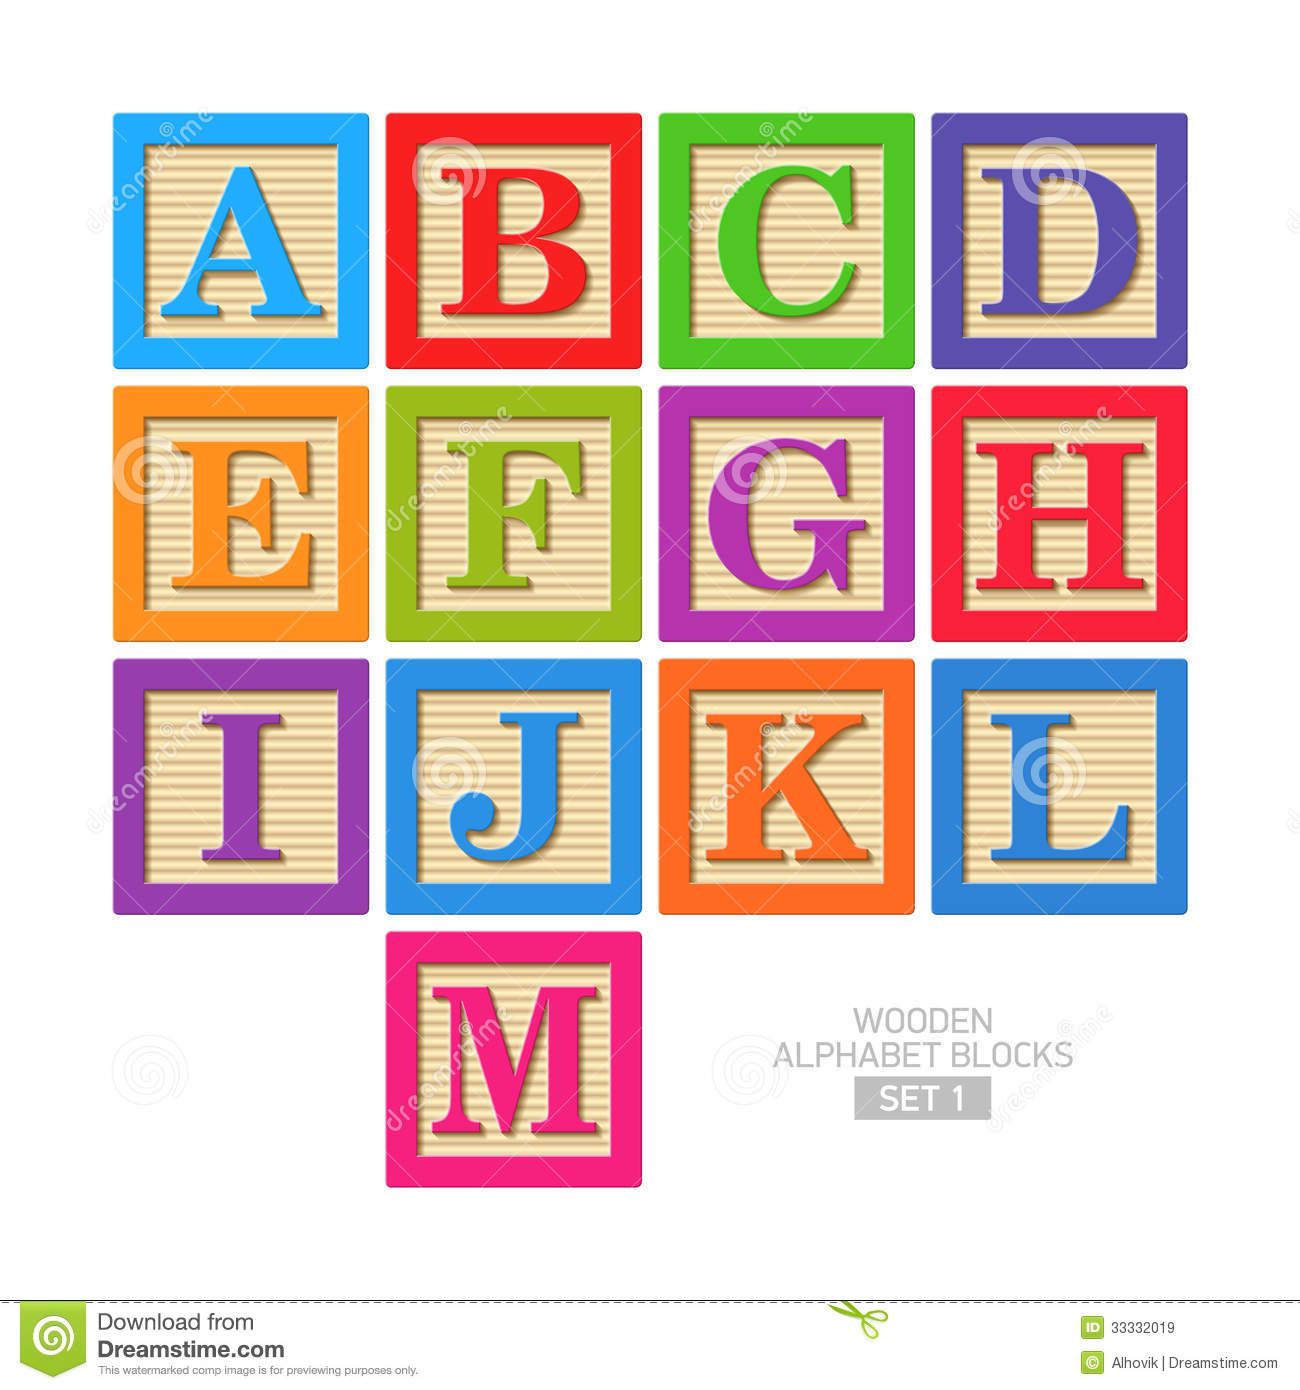 Wooden alphabet blocks.